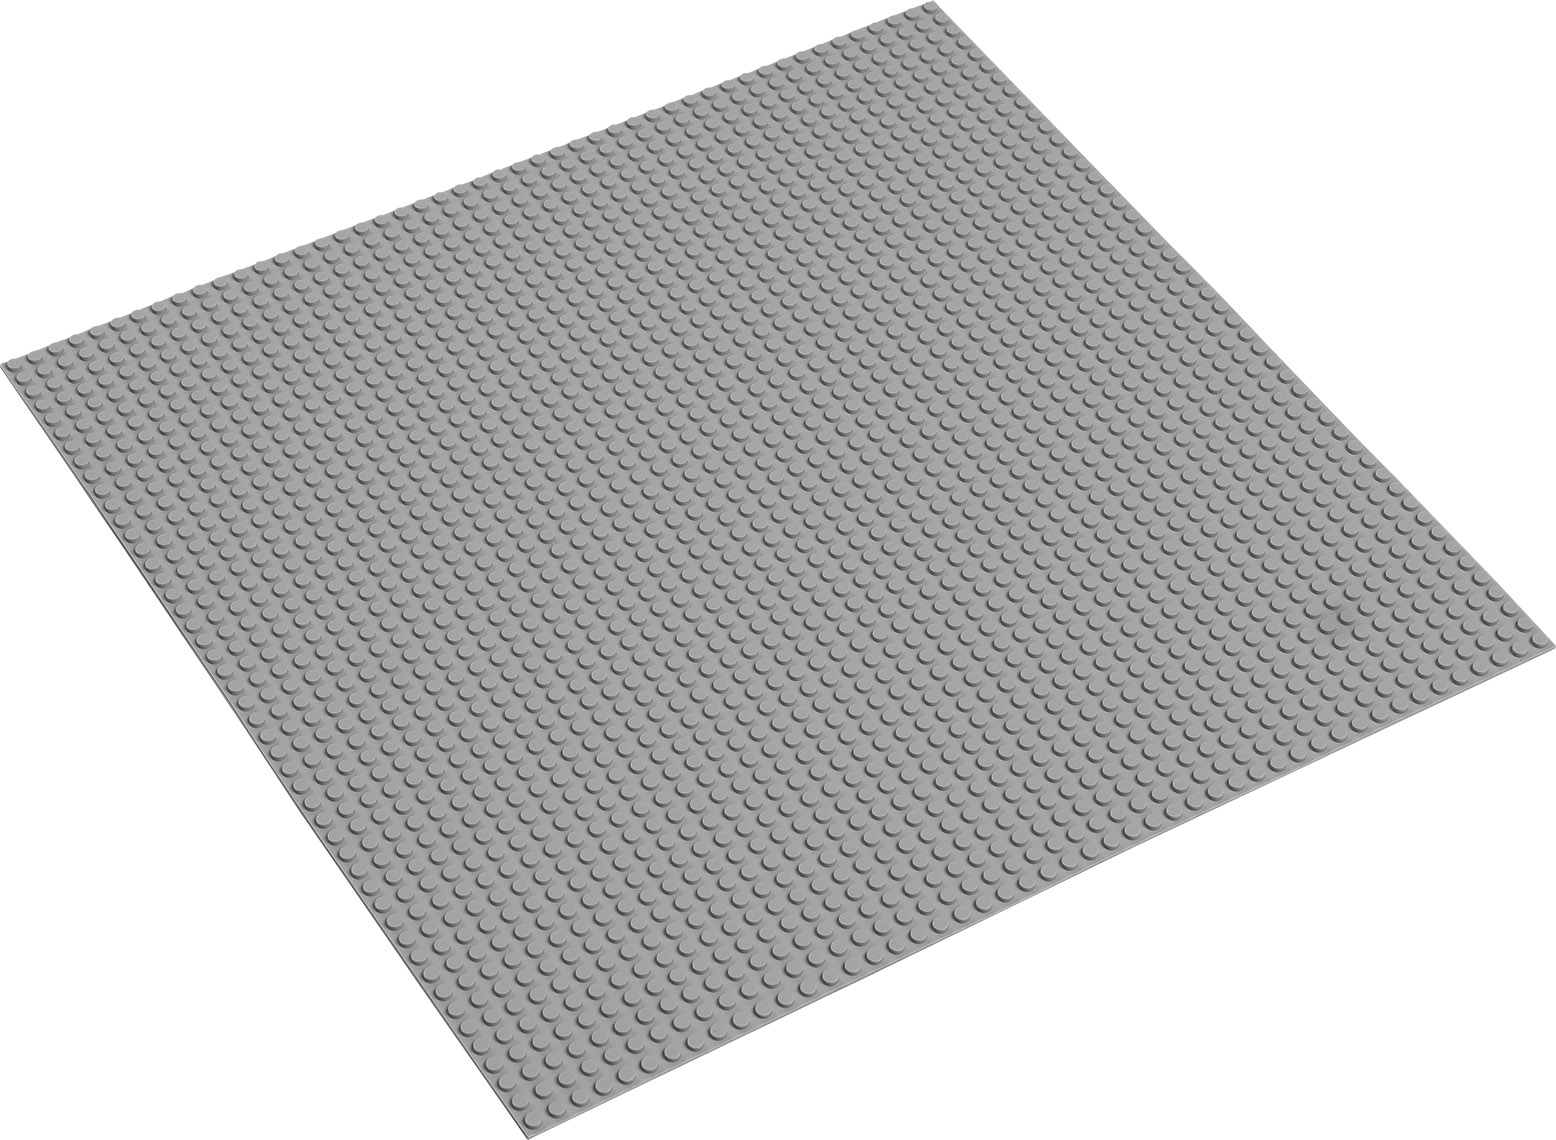 Big silicone pad for blocks